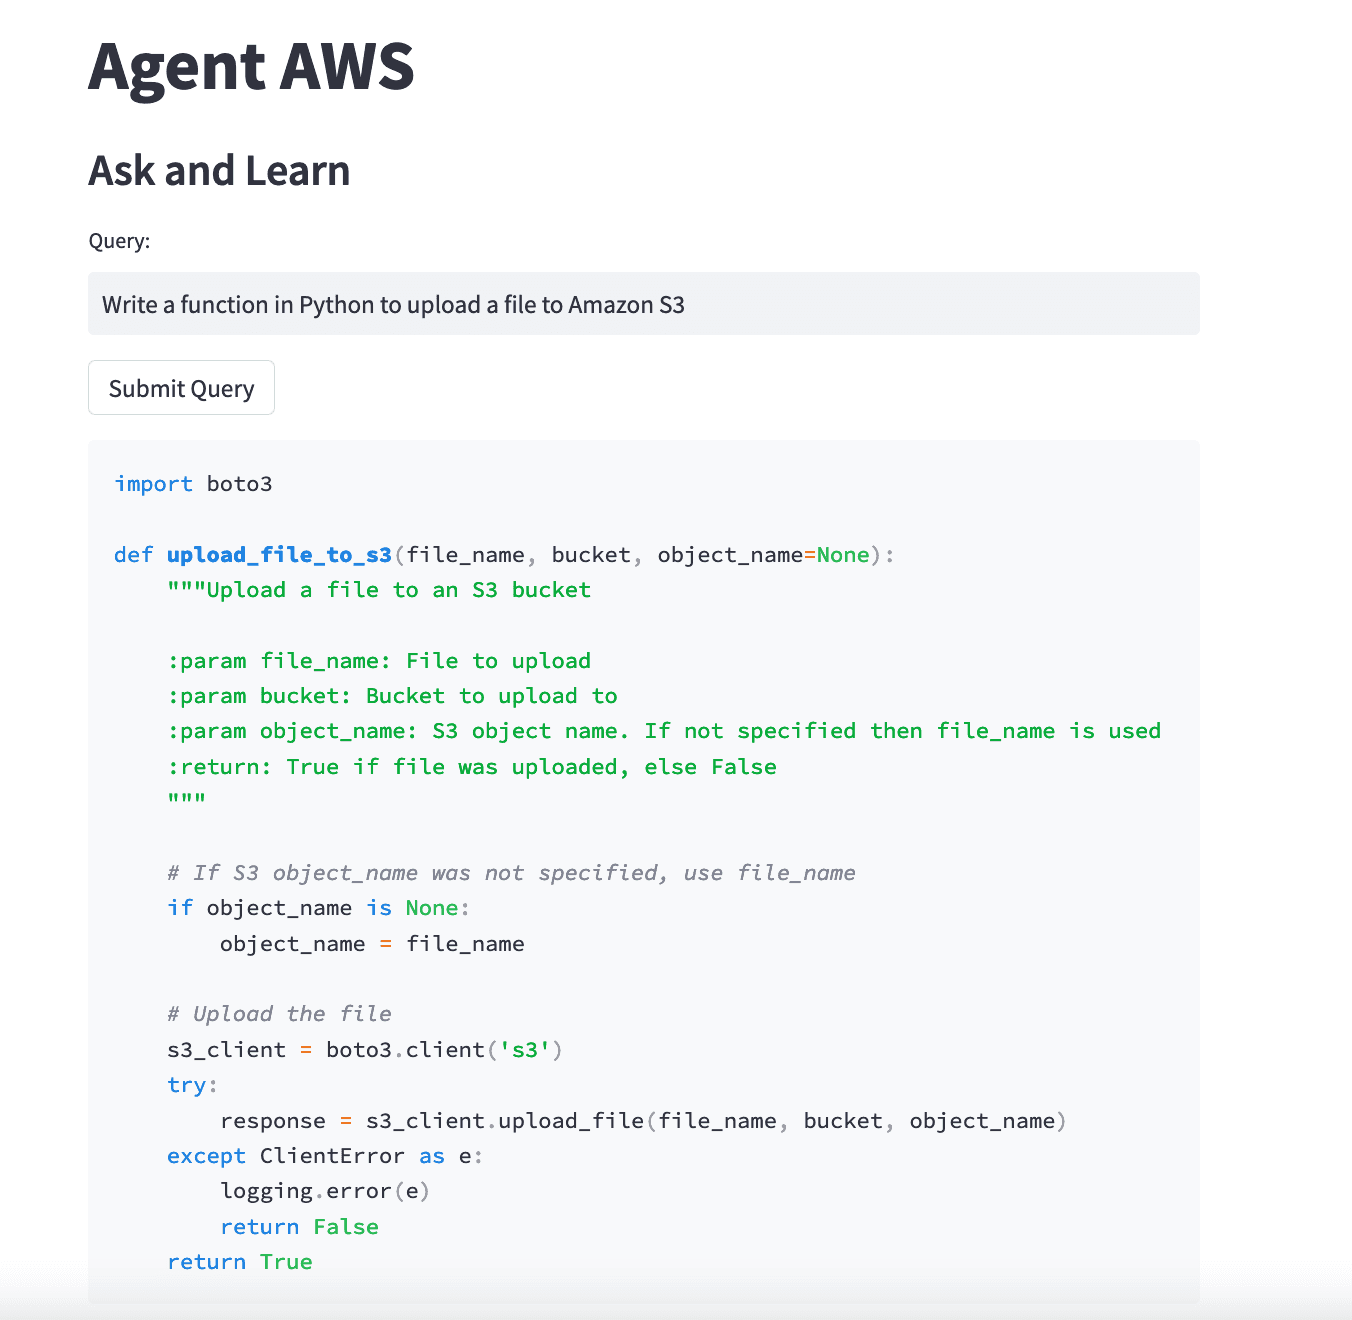 Agent AWS generates code